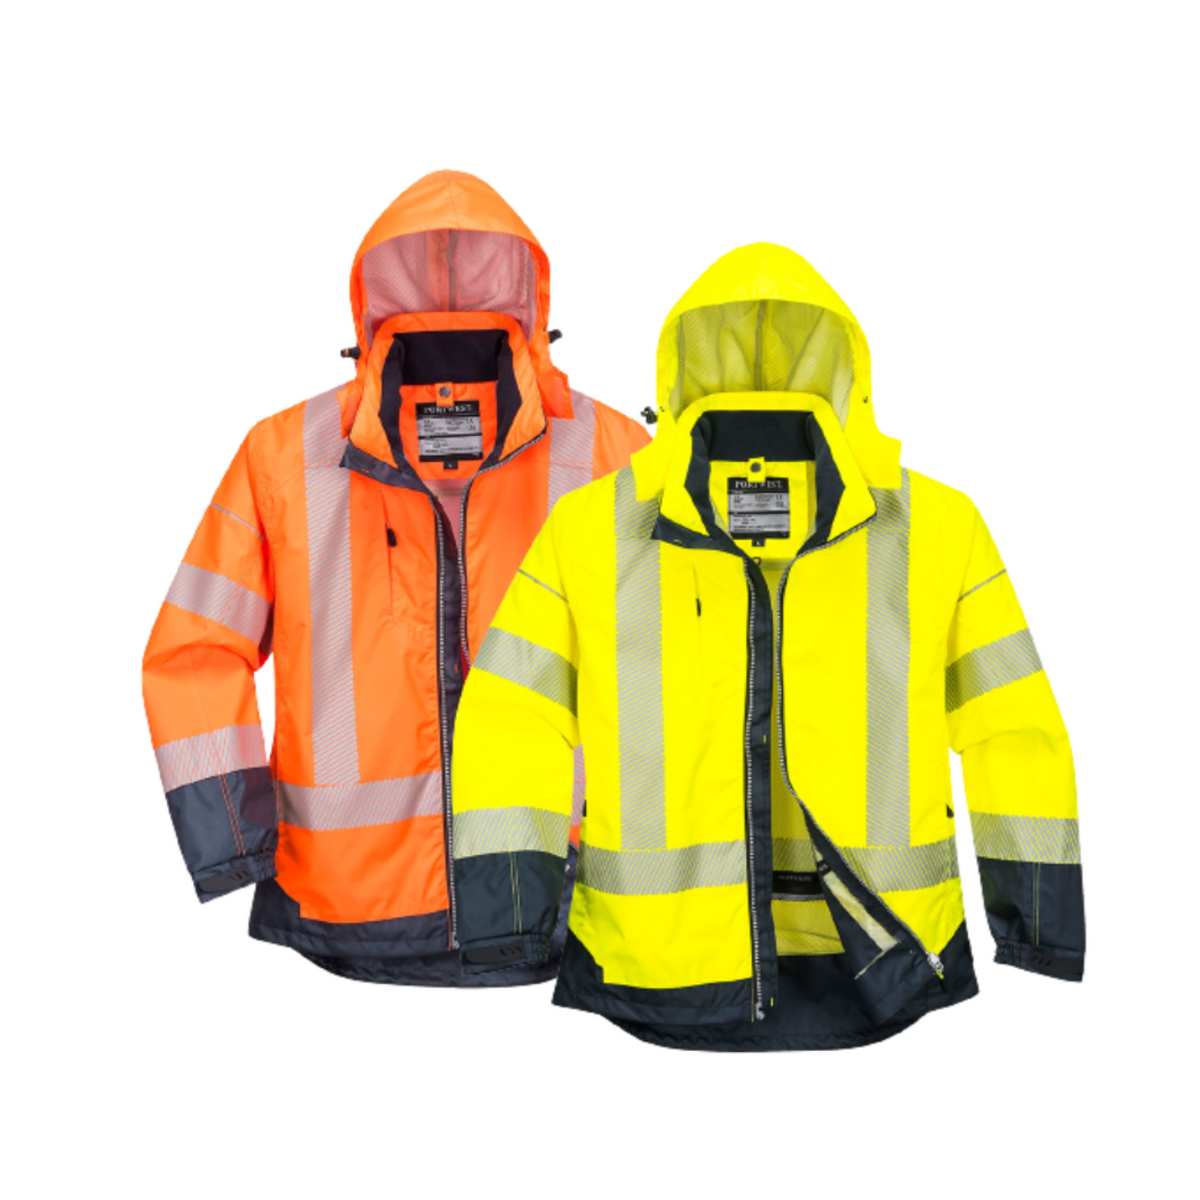 Portwest PW3 Hi-Vis Breathable Jacket 2 Tone Reflective Work Safety Hood T403-Collins Clothing Co